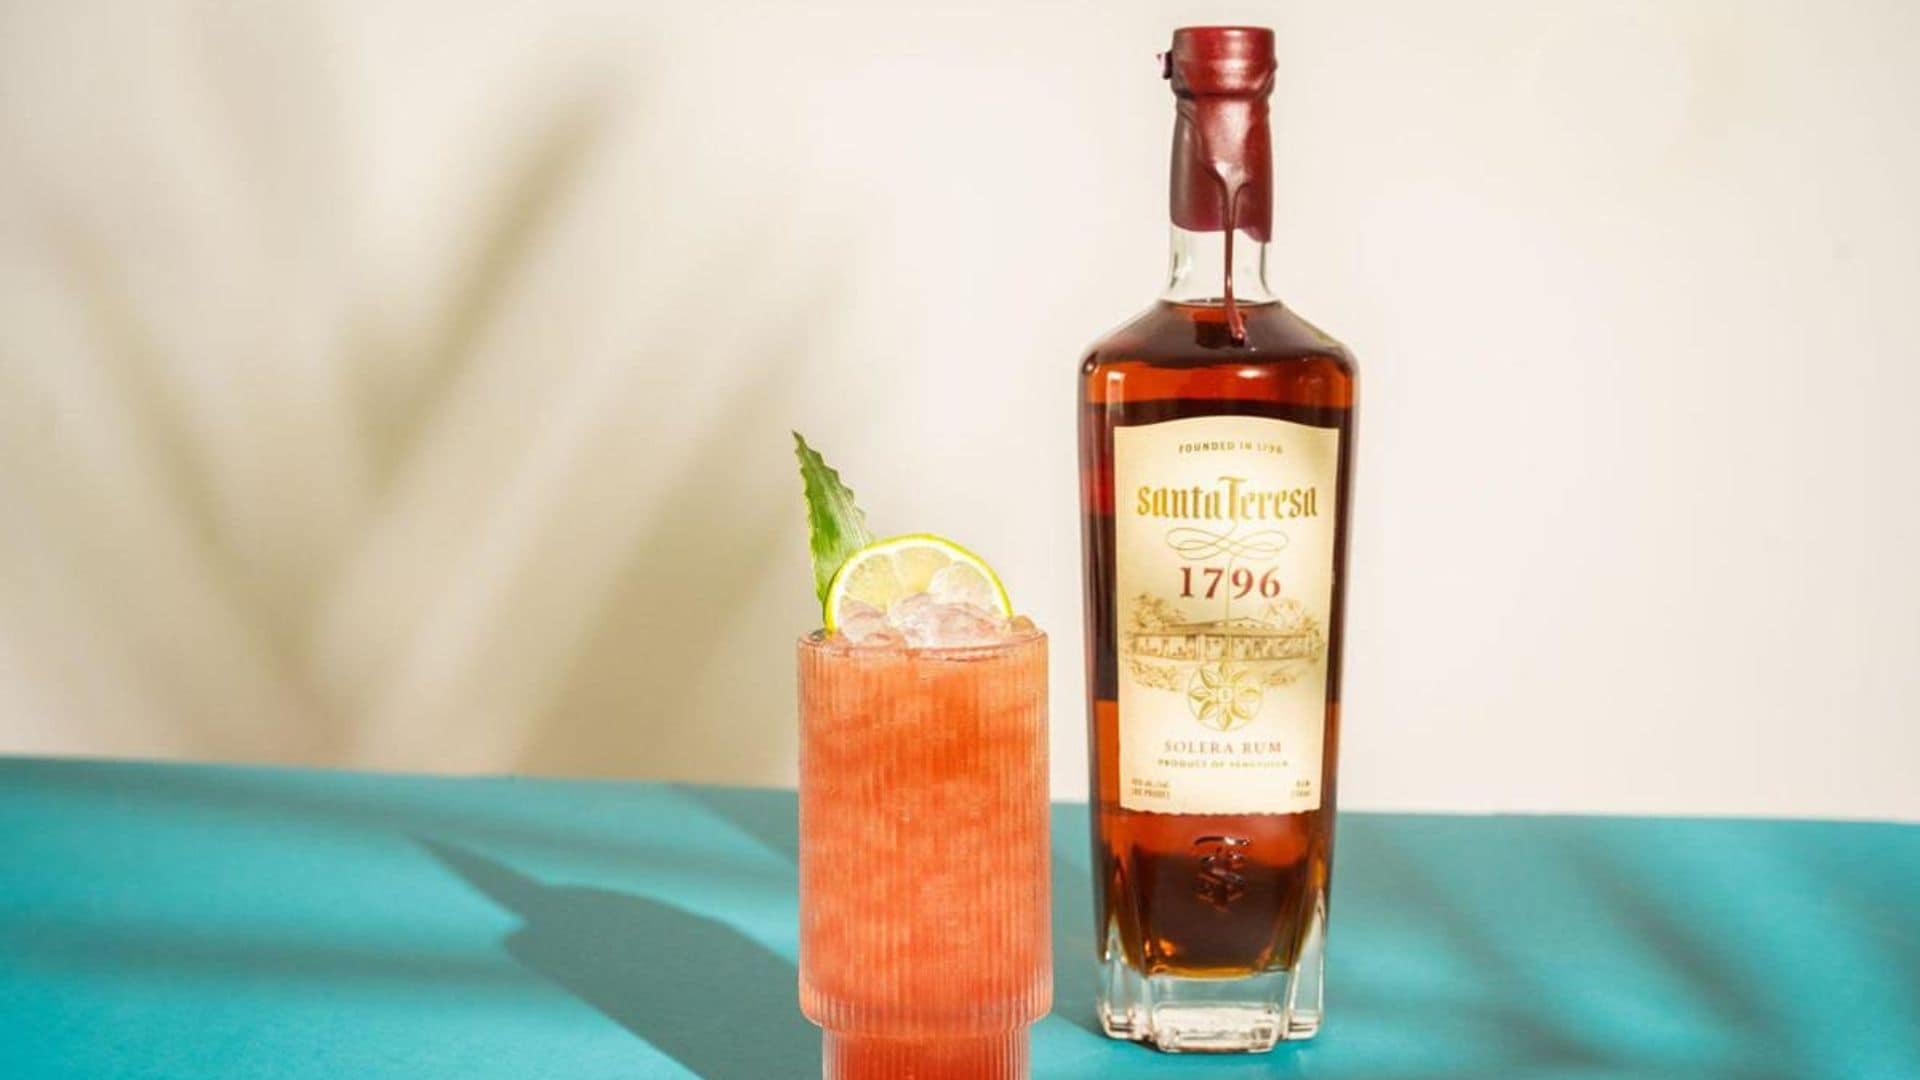 “La Guacamaya” with Santa Teresa 1796 Rum, the perfect cocktail to watch the Latin Grammy Awards